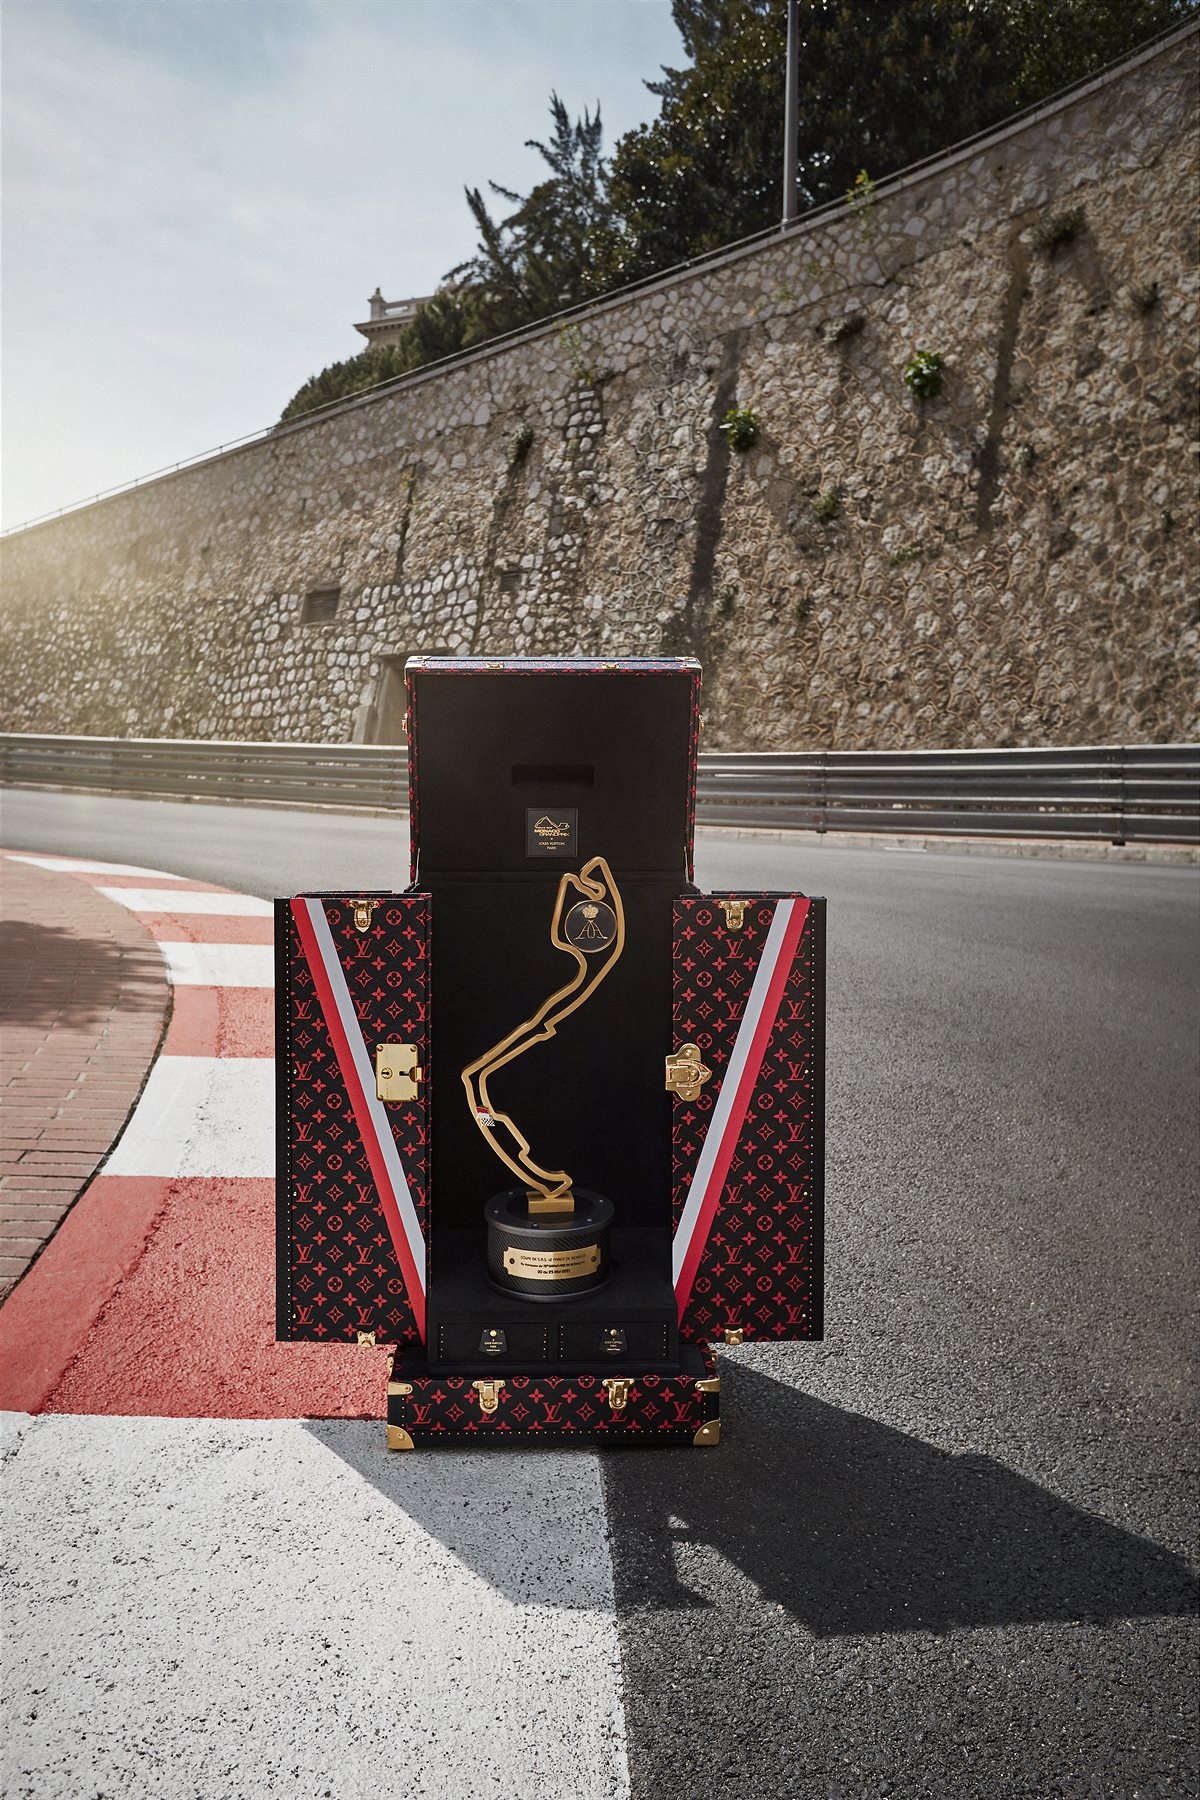 LV_Official Trophy Travel Case provider_Formula 1 Monaco Grand Prix (4)